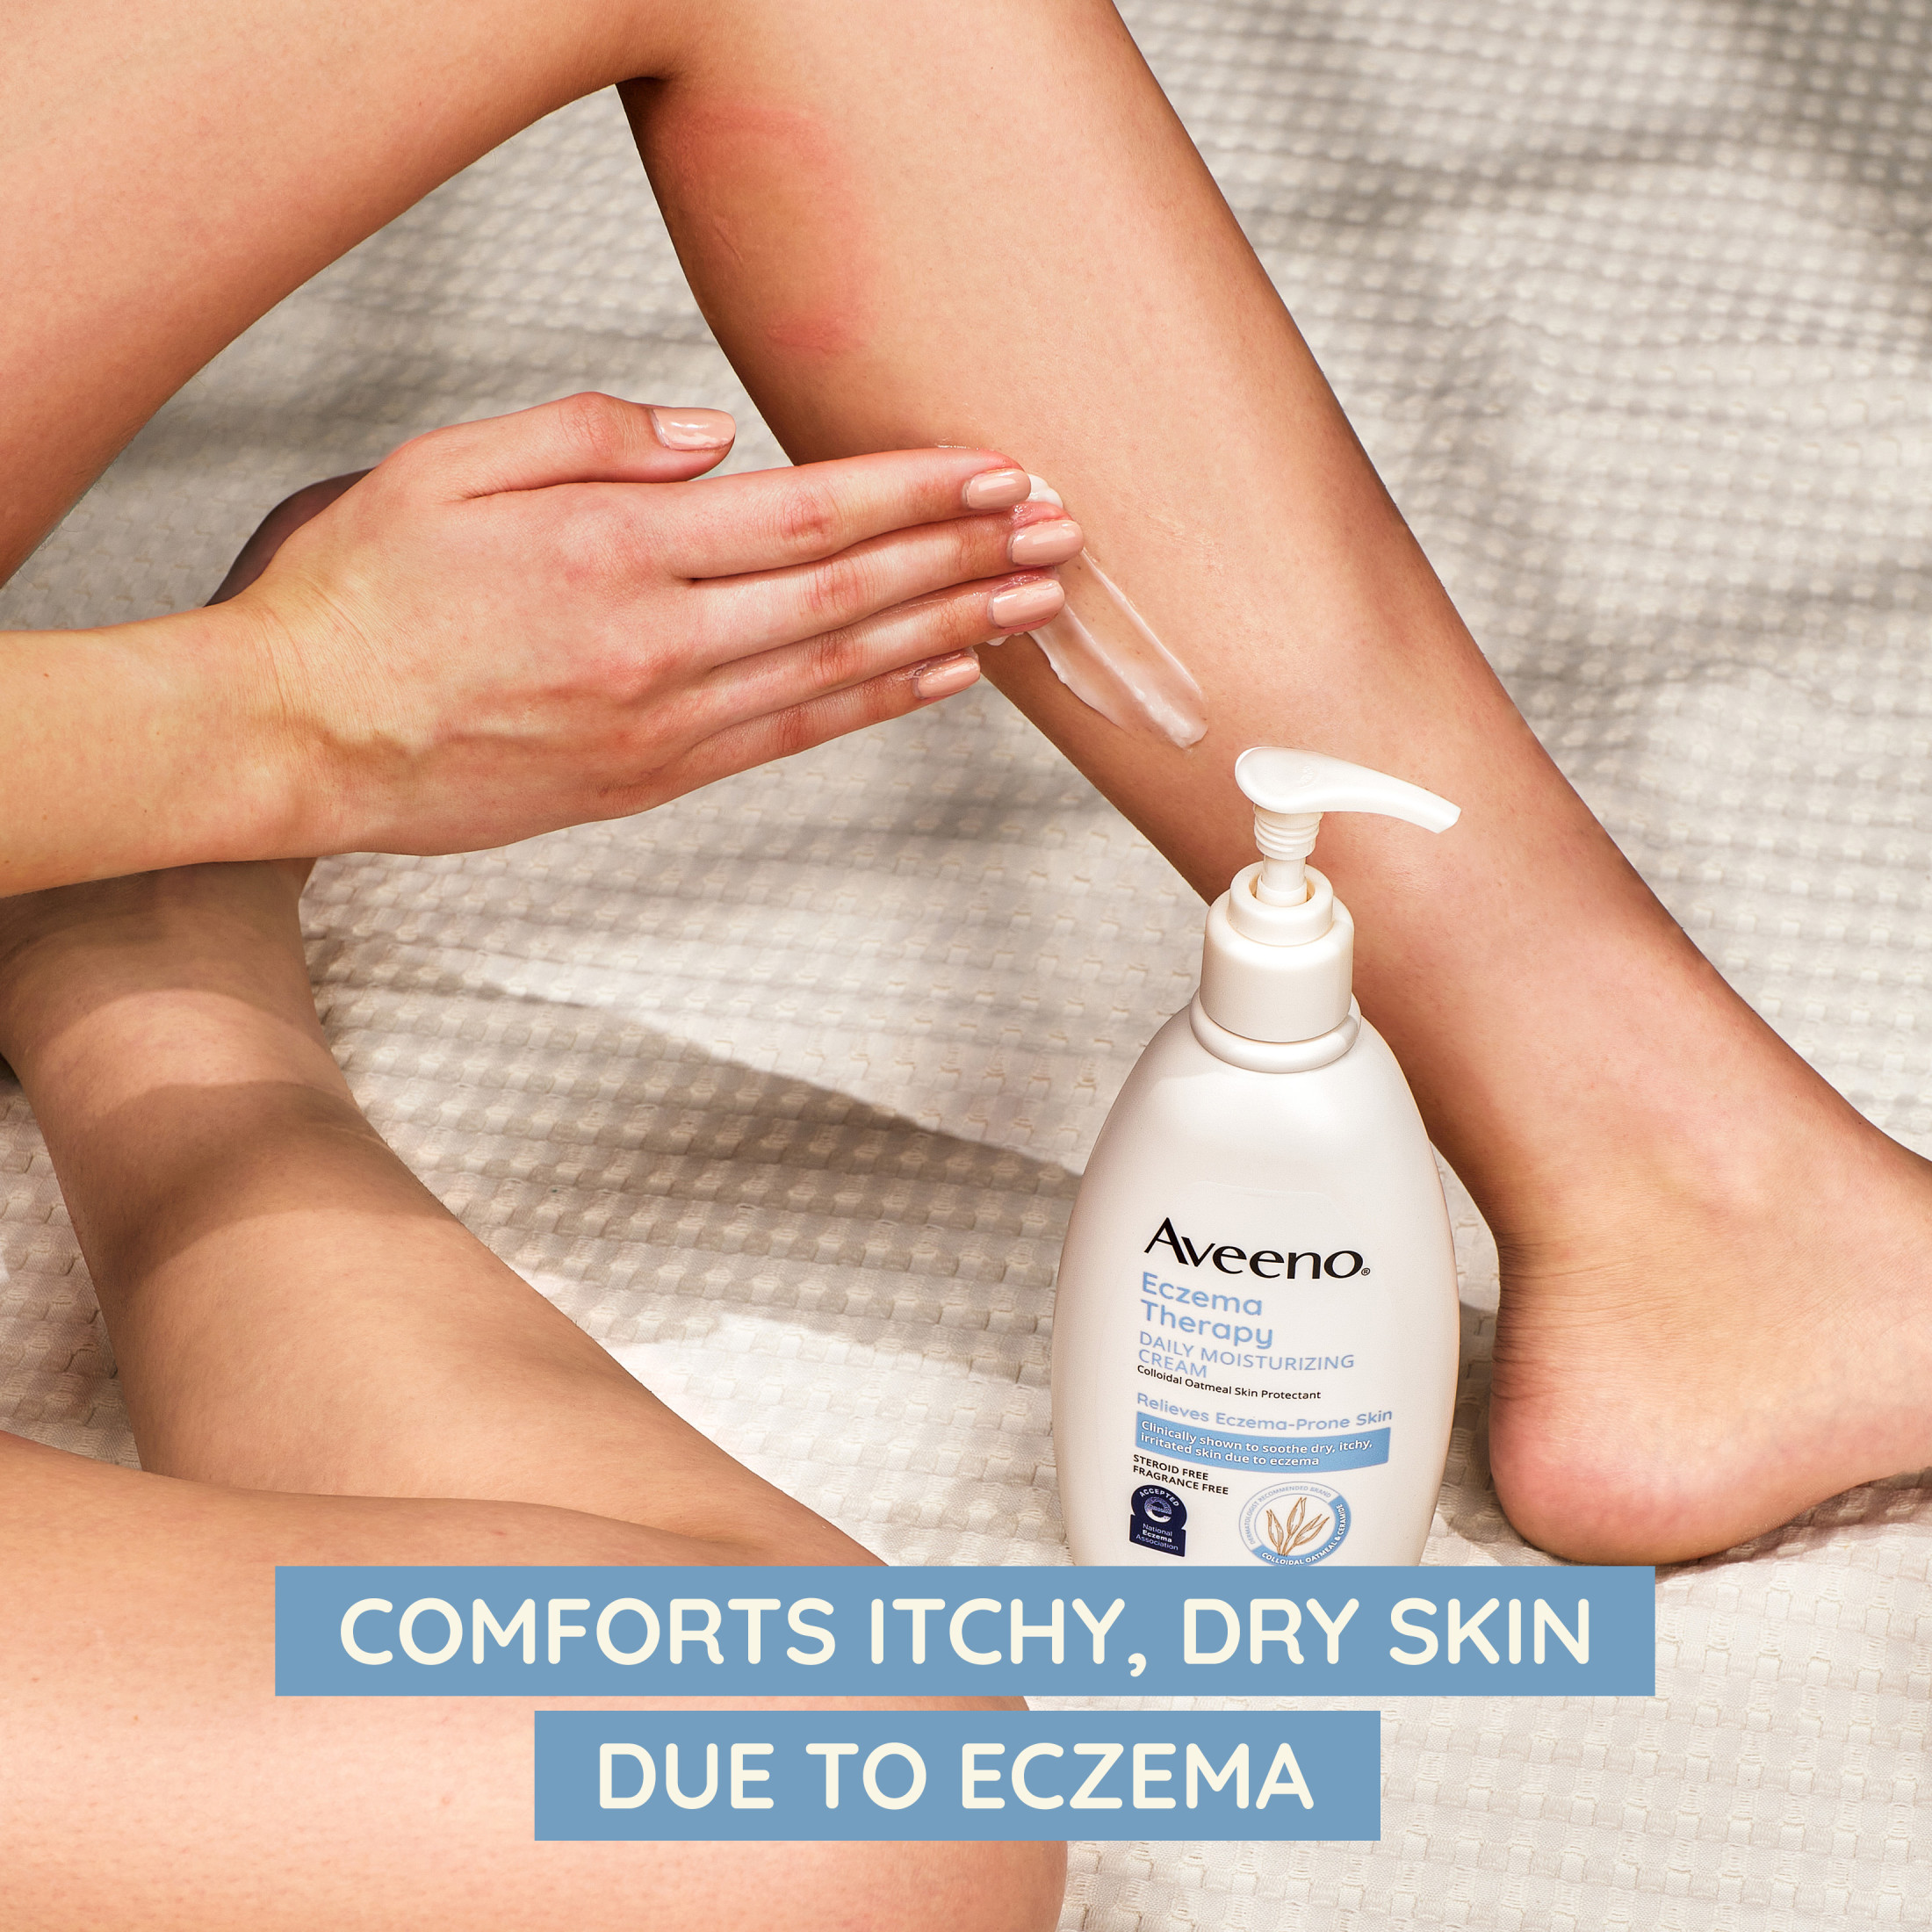 Aveeno Eczema Therapy Daily Moisturizing Body Lotion, Fragrance Free Cream, 7.3 oz - image 3 of 11